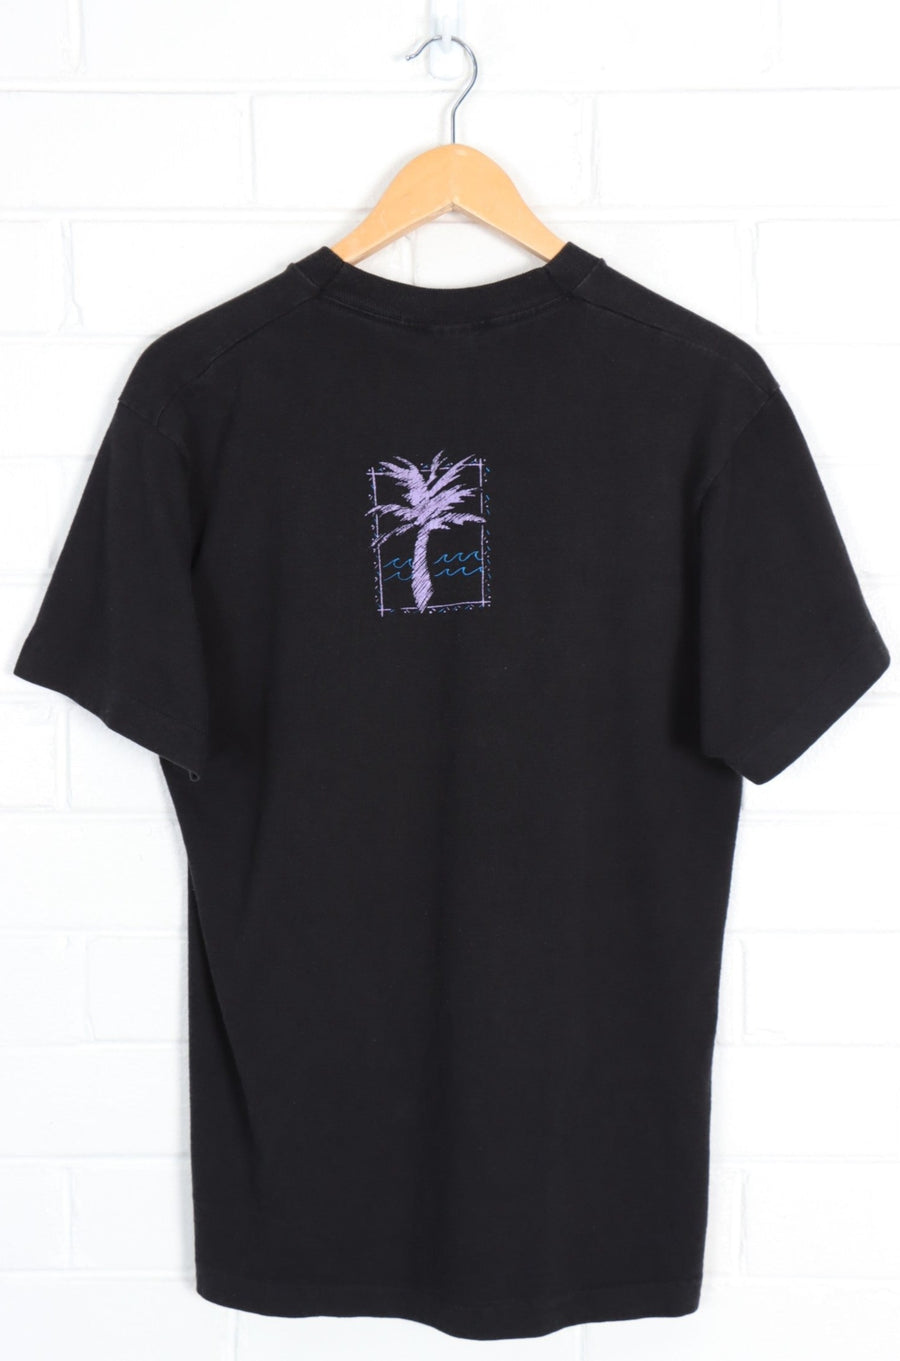 Miami Beach Colourful Sailboat & Palms Trees T-Shirt USA Made (M-L)